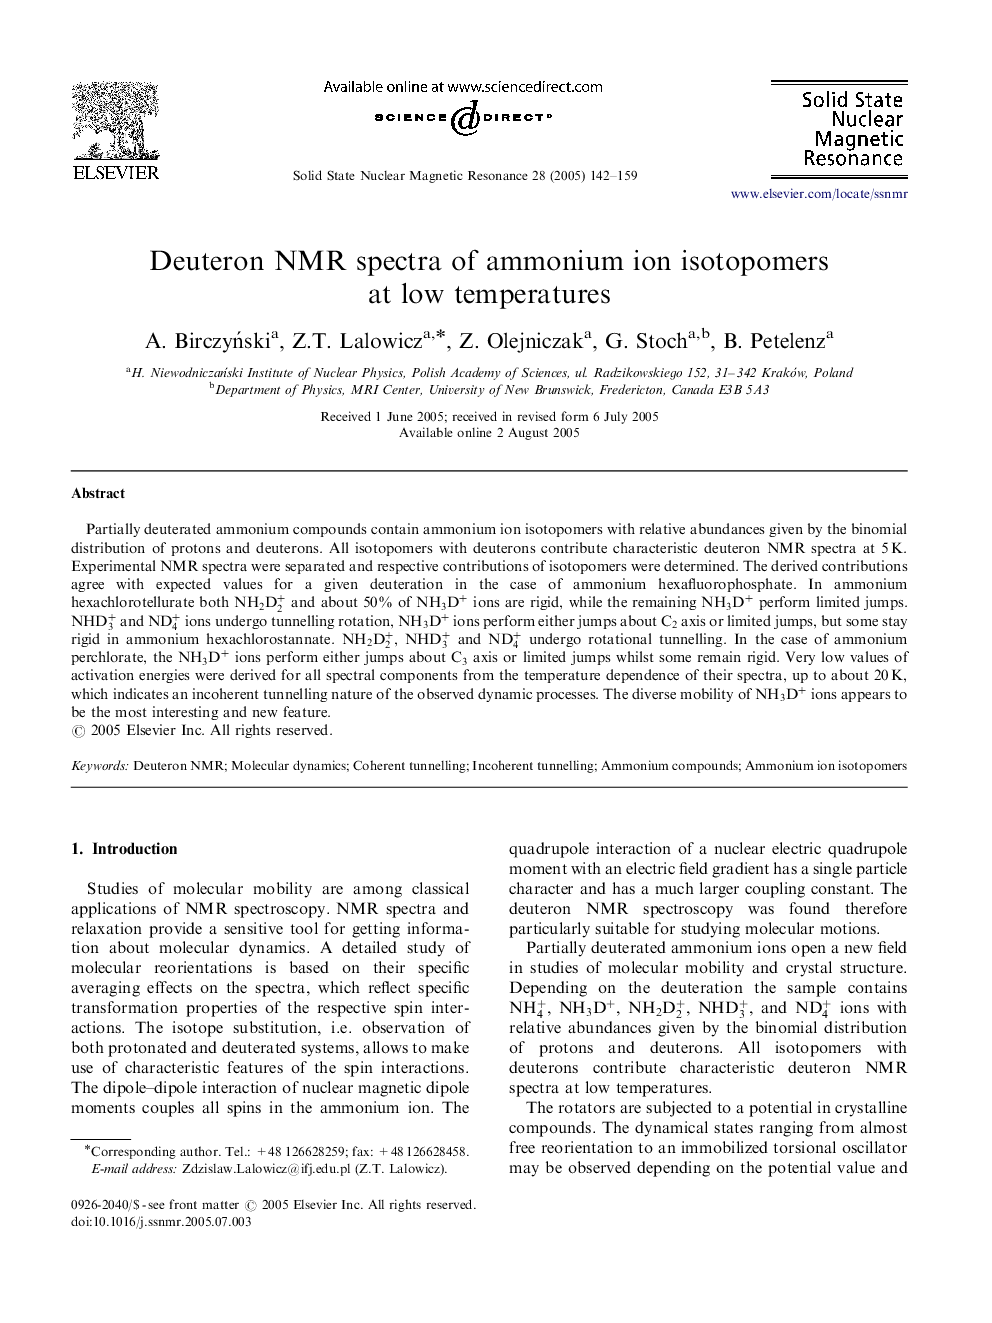 Deuteron NMR spectra of ammonium ion isotopomers at low temperatures